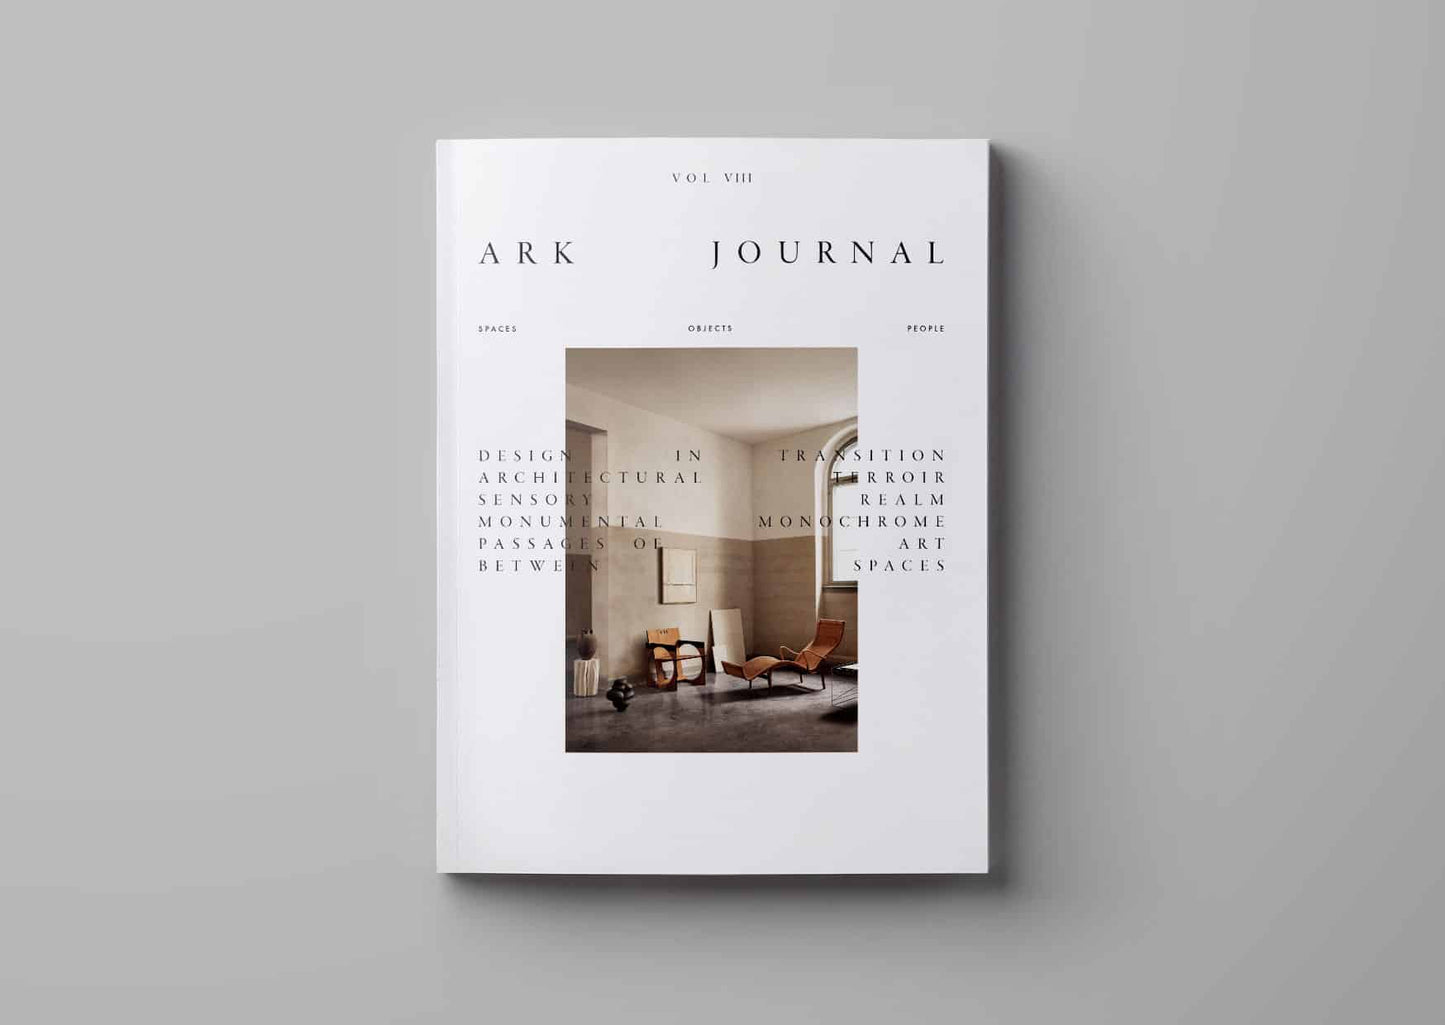 Ark Journal Vol VIII